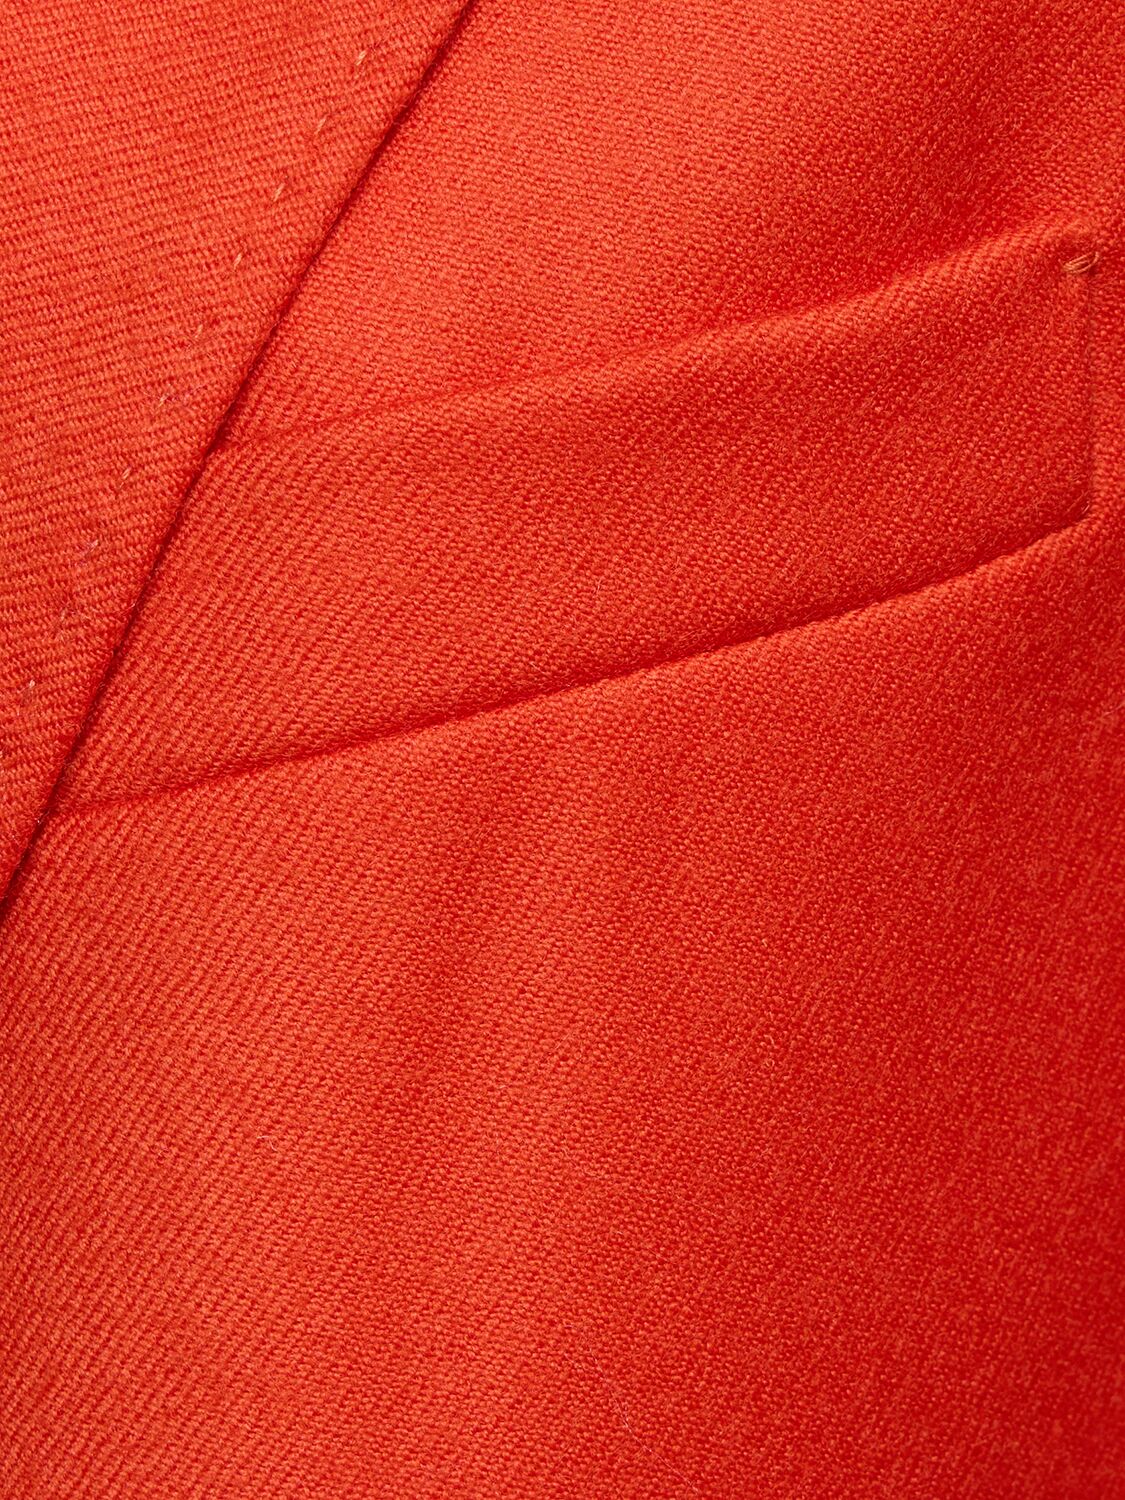 Shop Blazé Milano Exit Wool Blazer In Orange